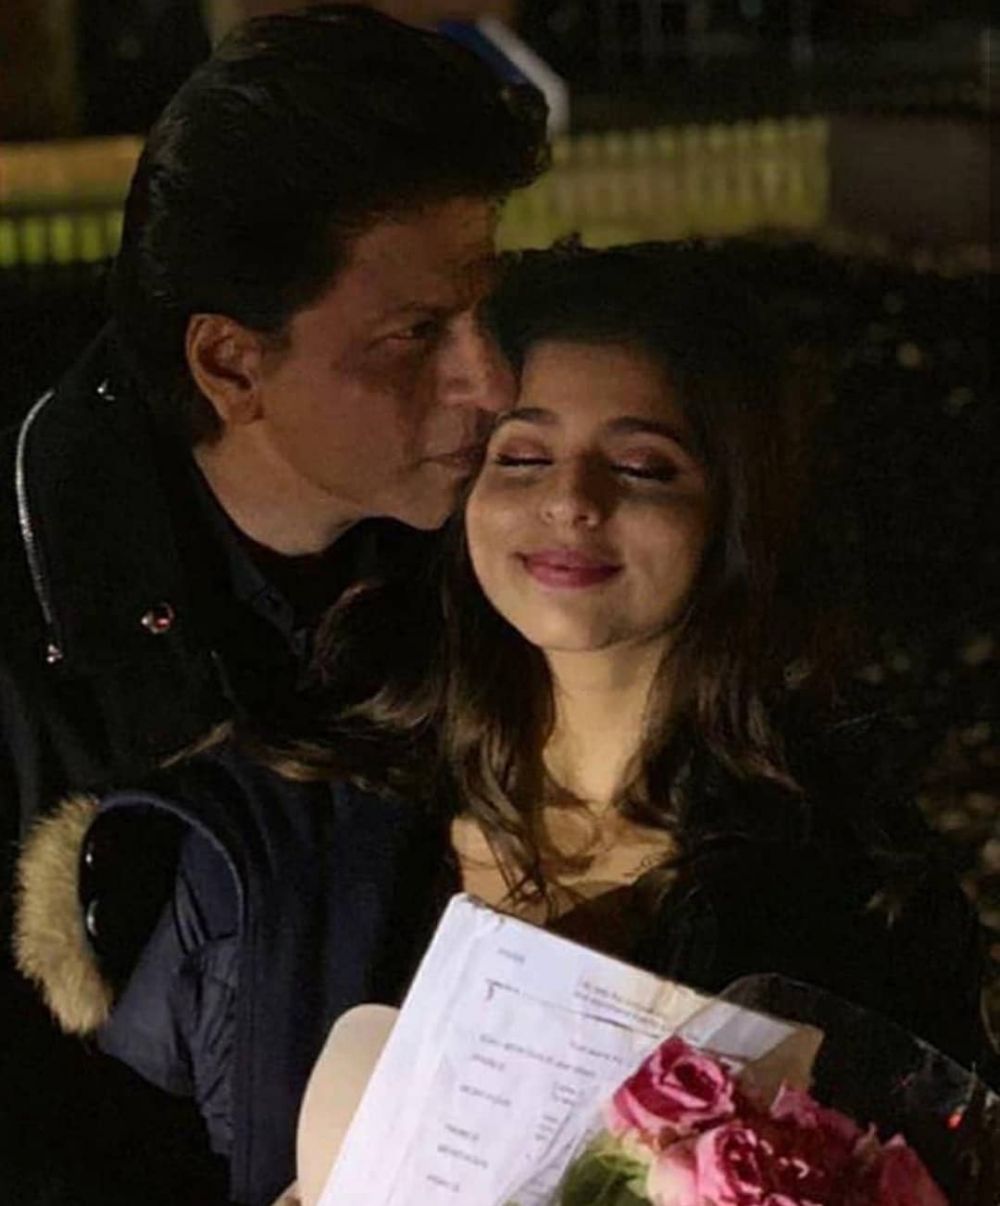 Sang putri ingin jadi aktris, Shahrukh Khan minta belajar dari Kajol